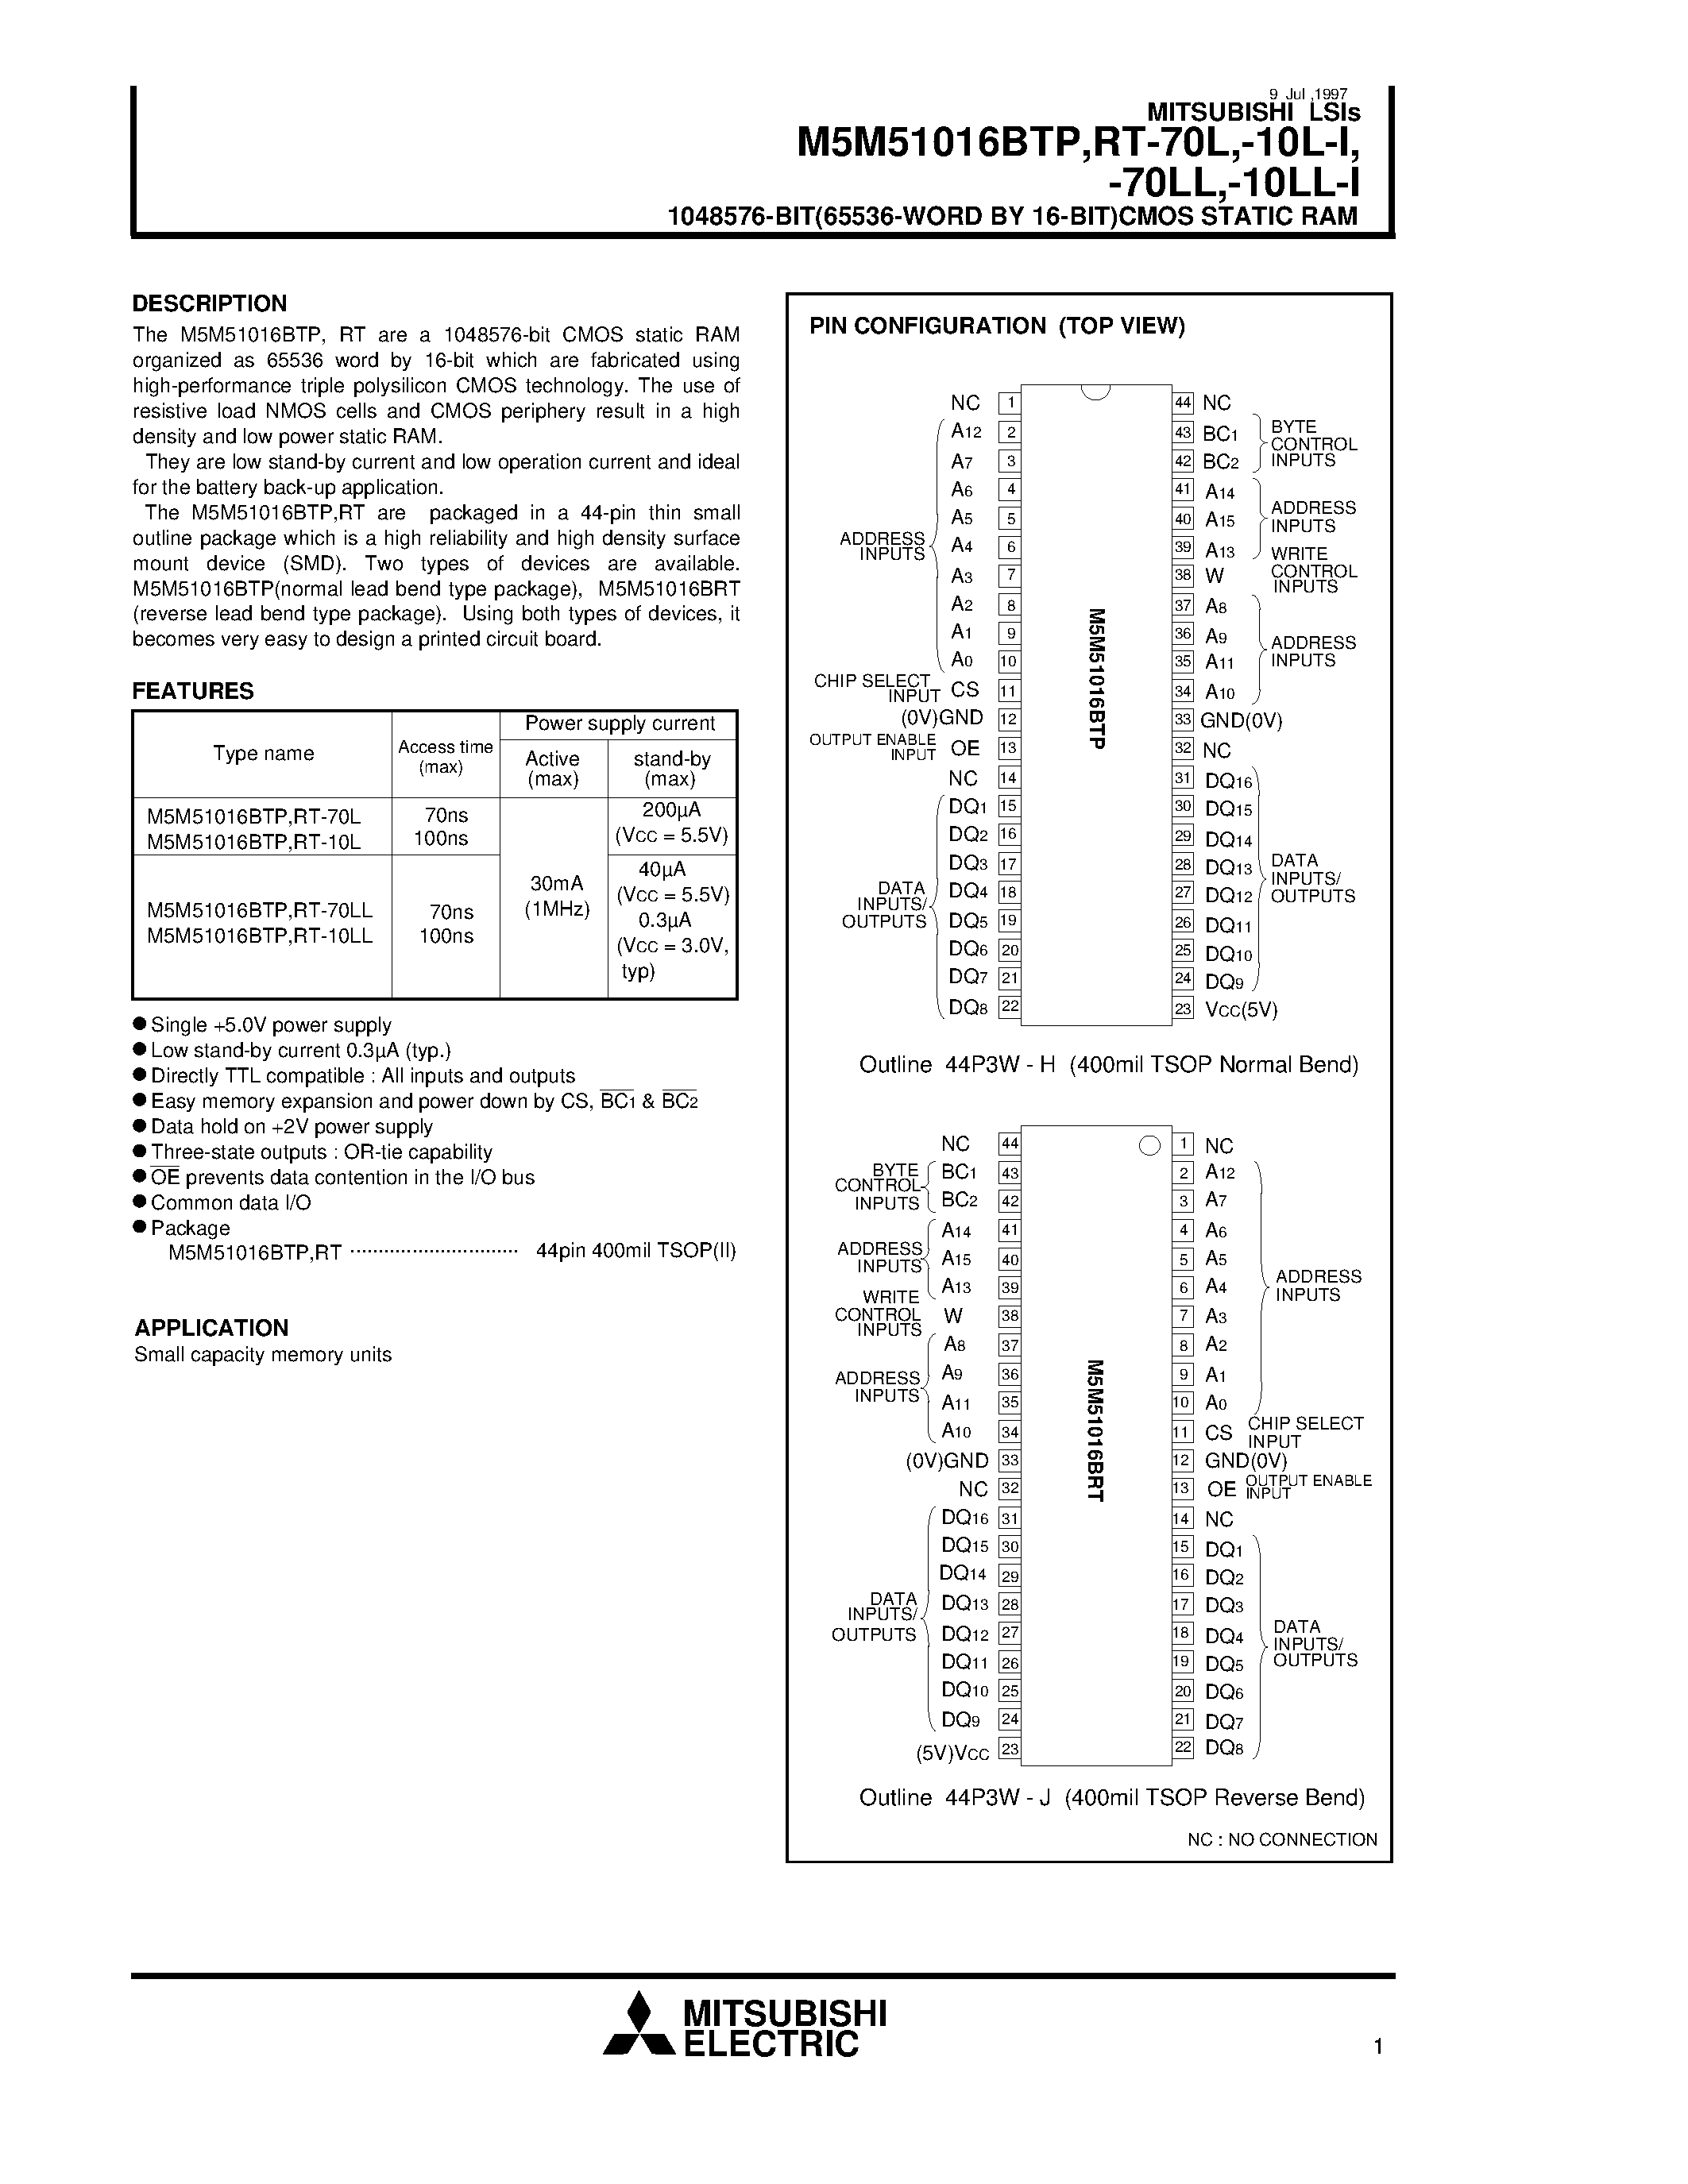 Datasheet M5M51016BRT-10L-I - 1048576-BIT(65536-WORD BY 16-BIT)CMOS STATIC RAM page 1